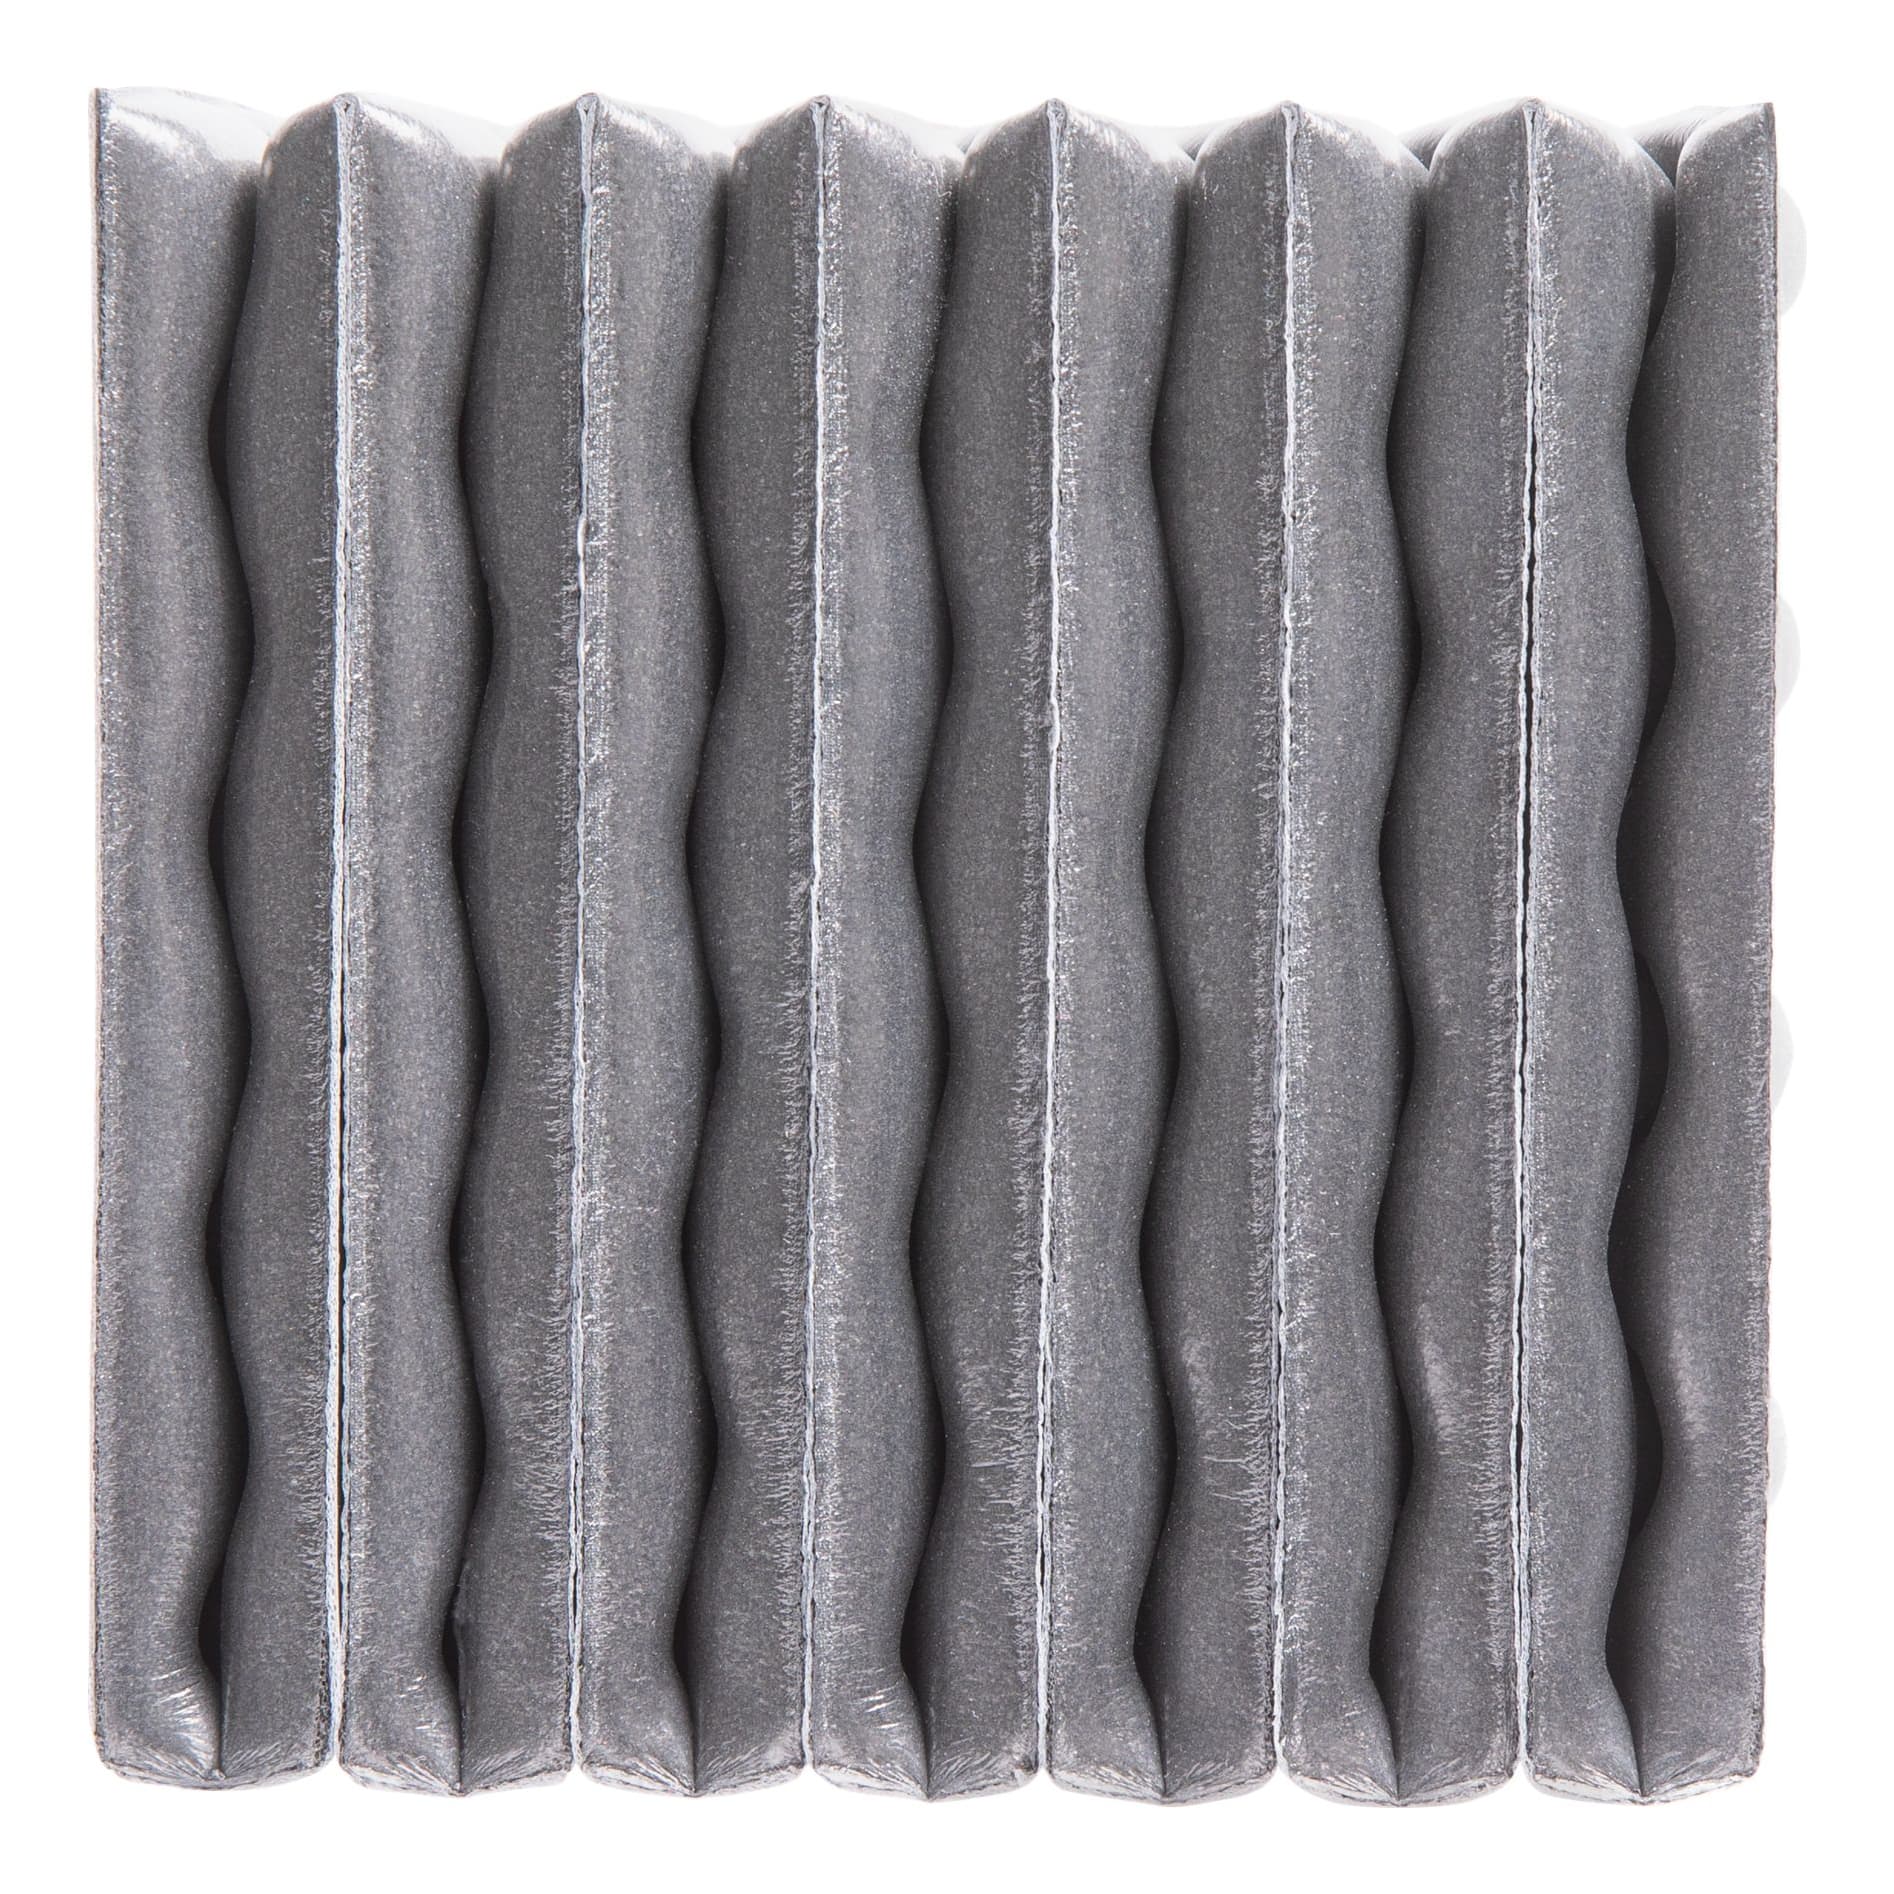 Ascend® Folding Closed-Cell Foam Sleeping Pad